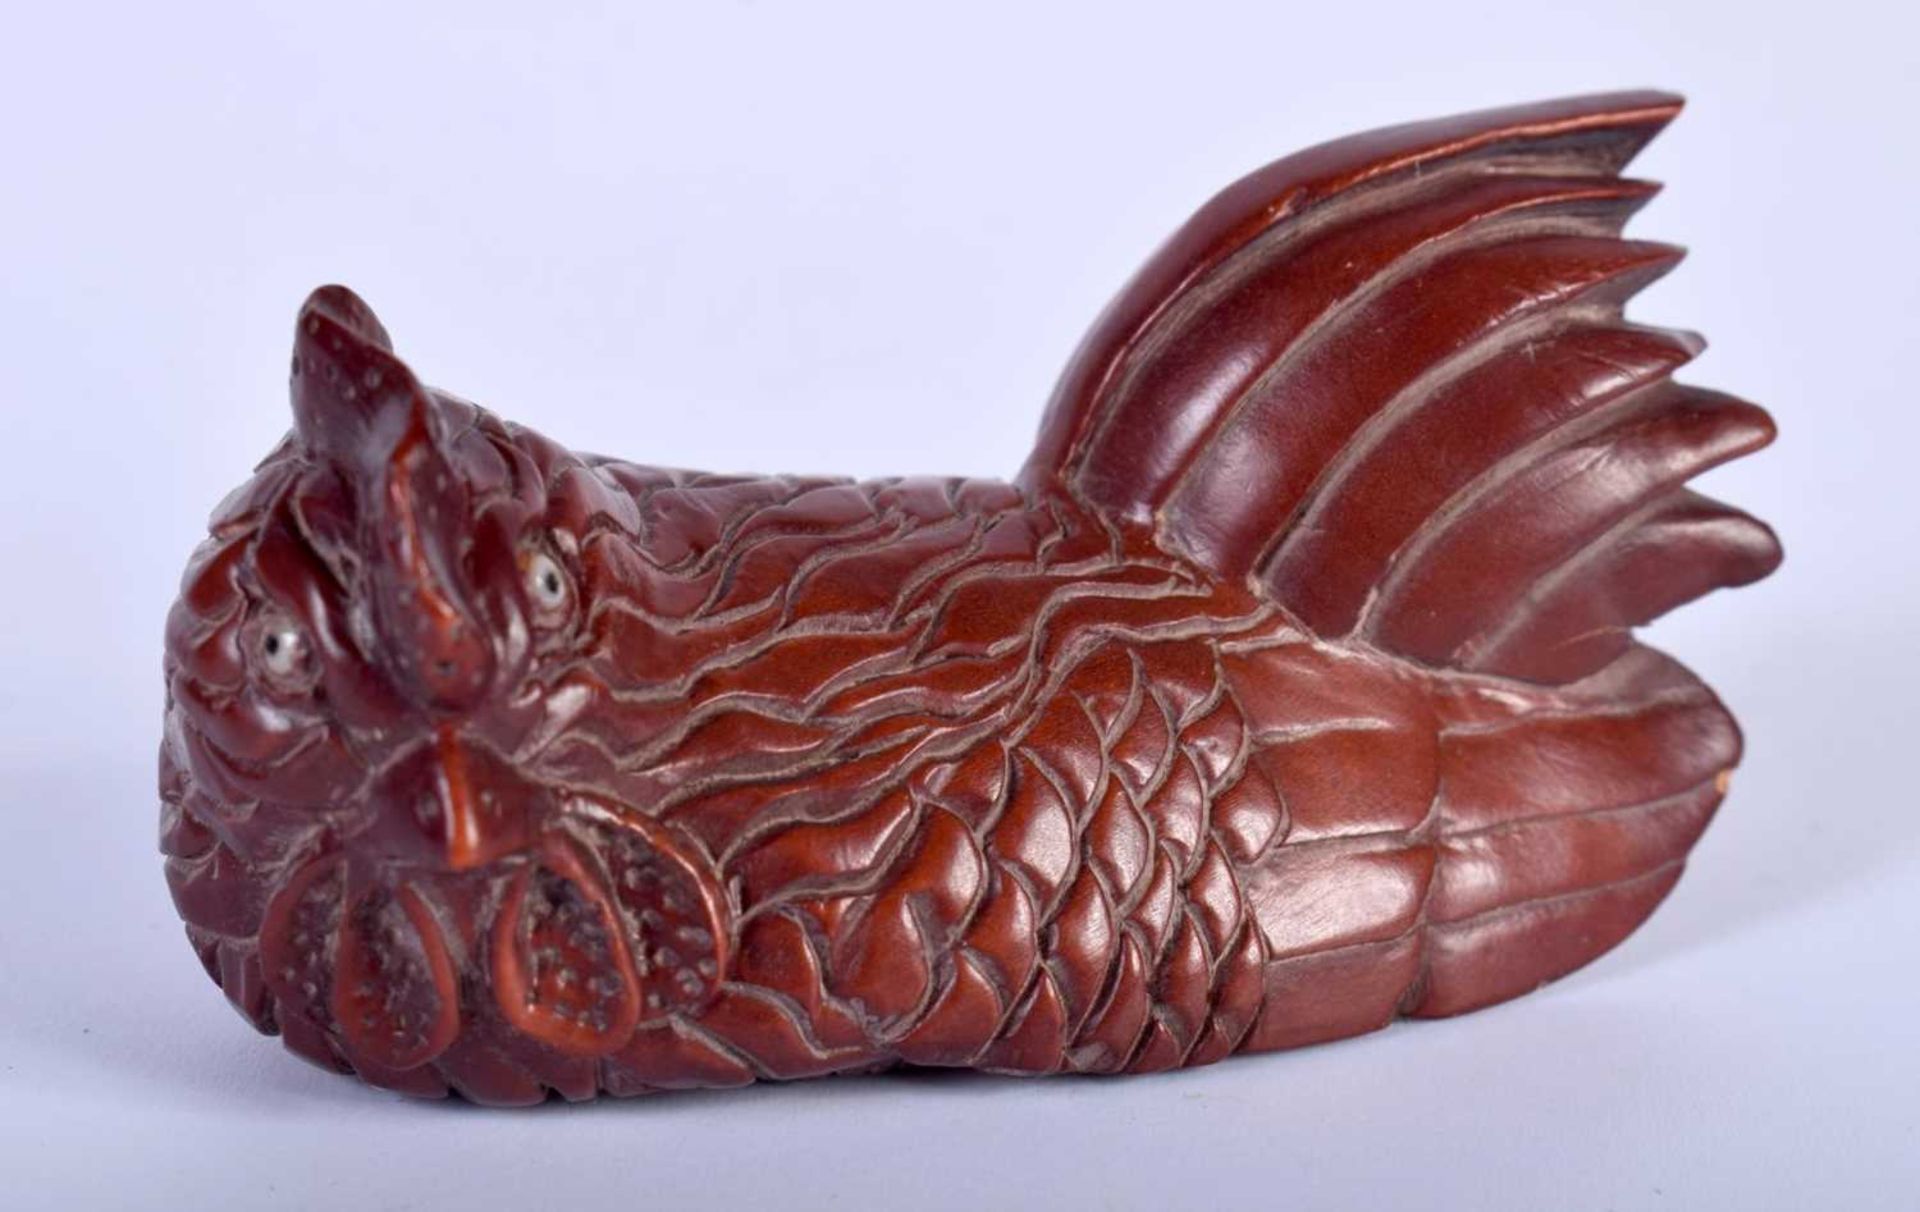 A Carved Hardwood Netsuke of a Chicken. 2.9cm x 6.2cm x 3.1cm. Weight 29g